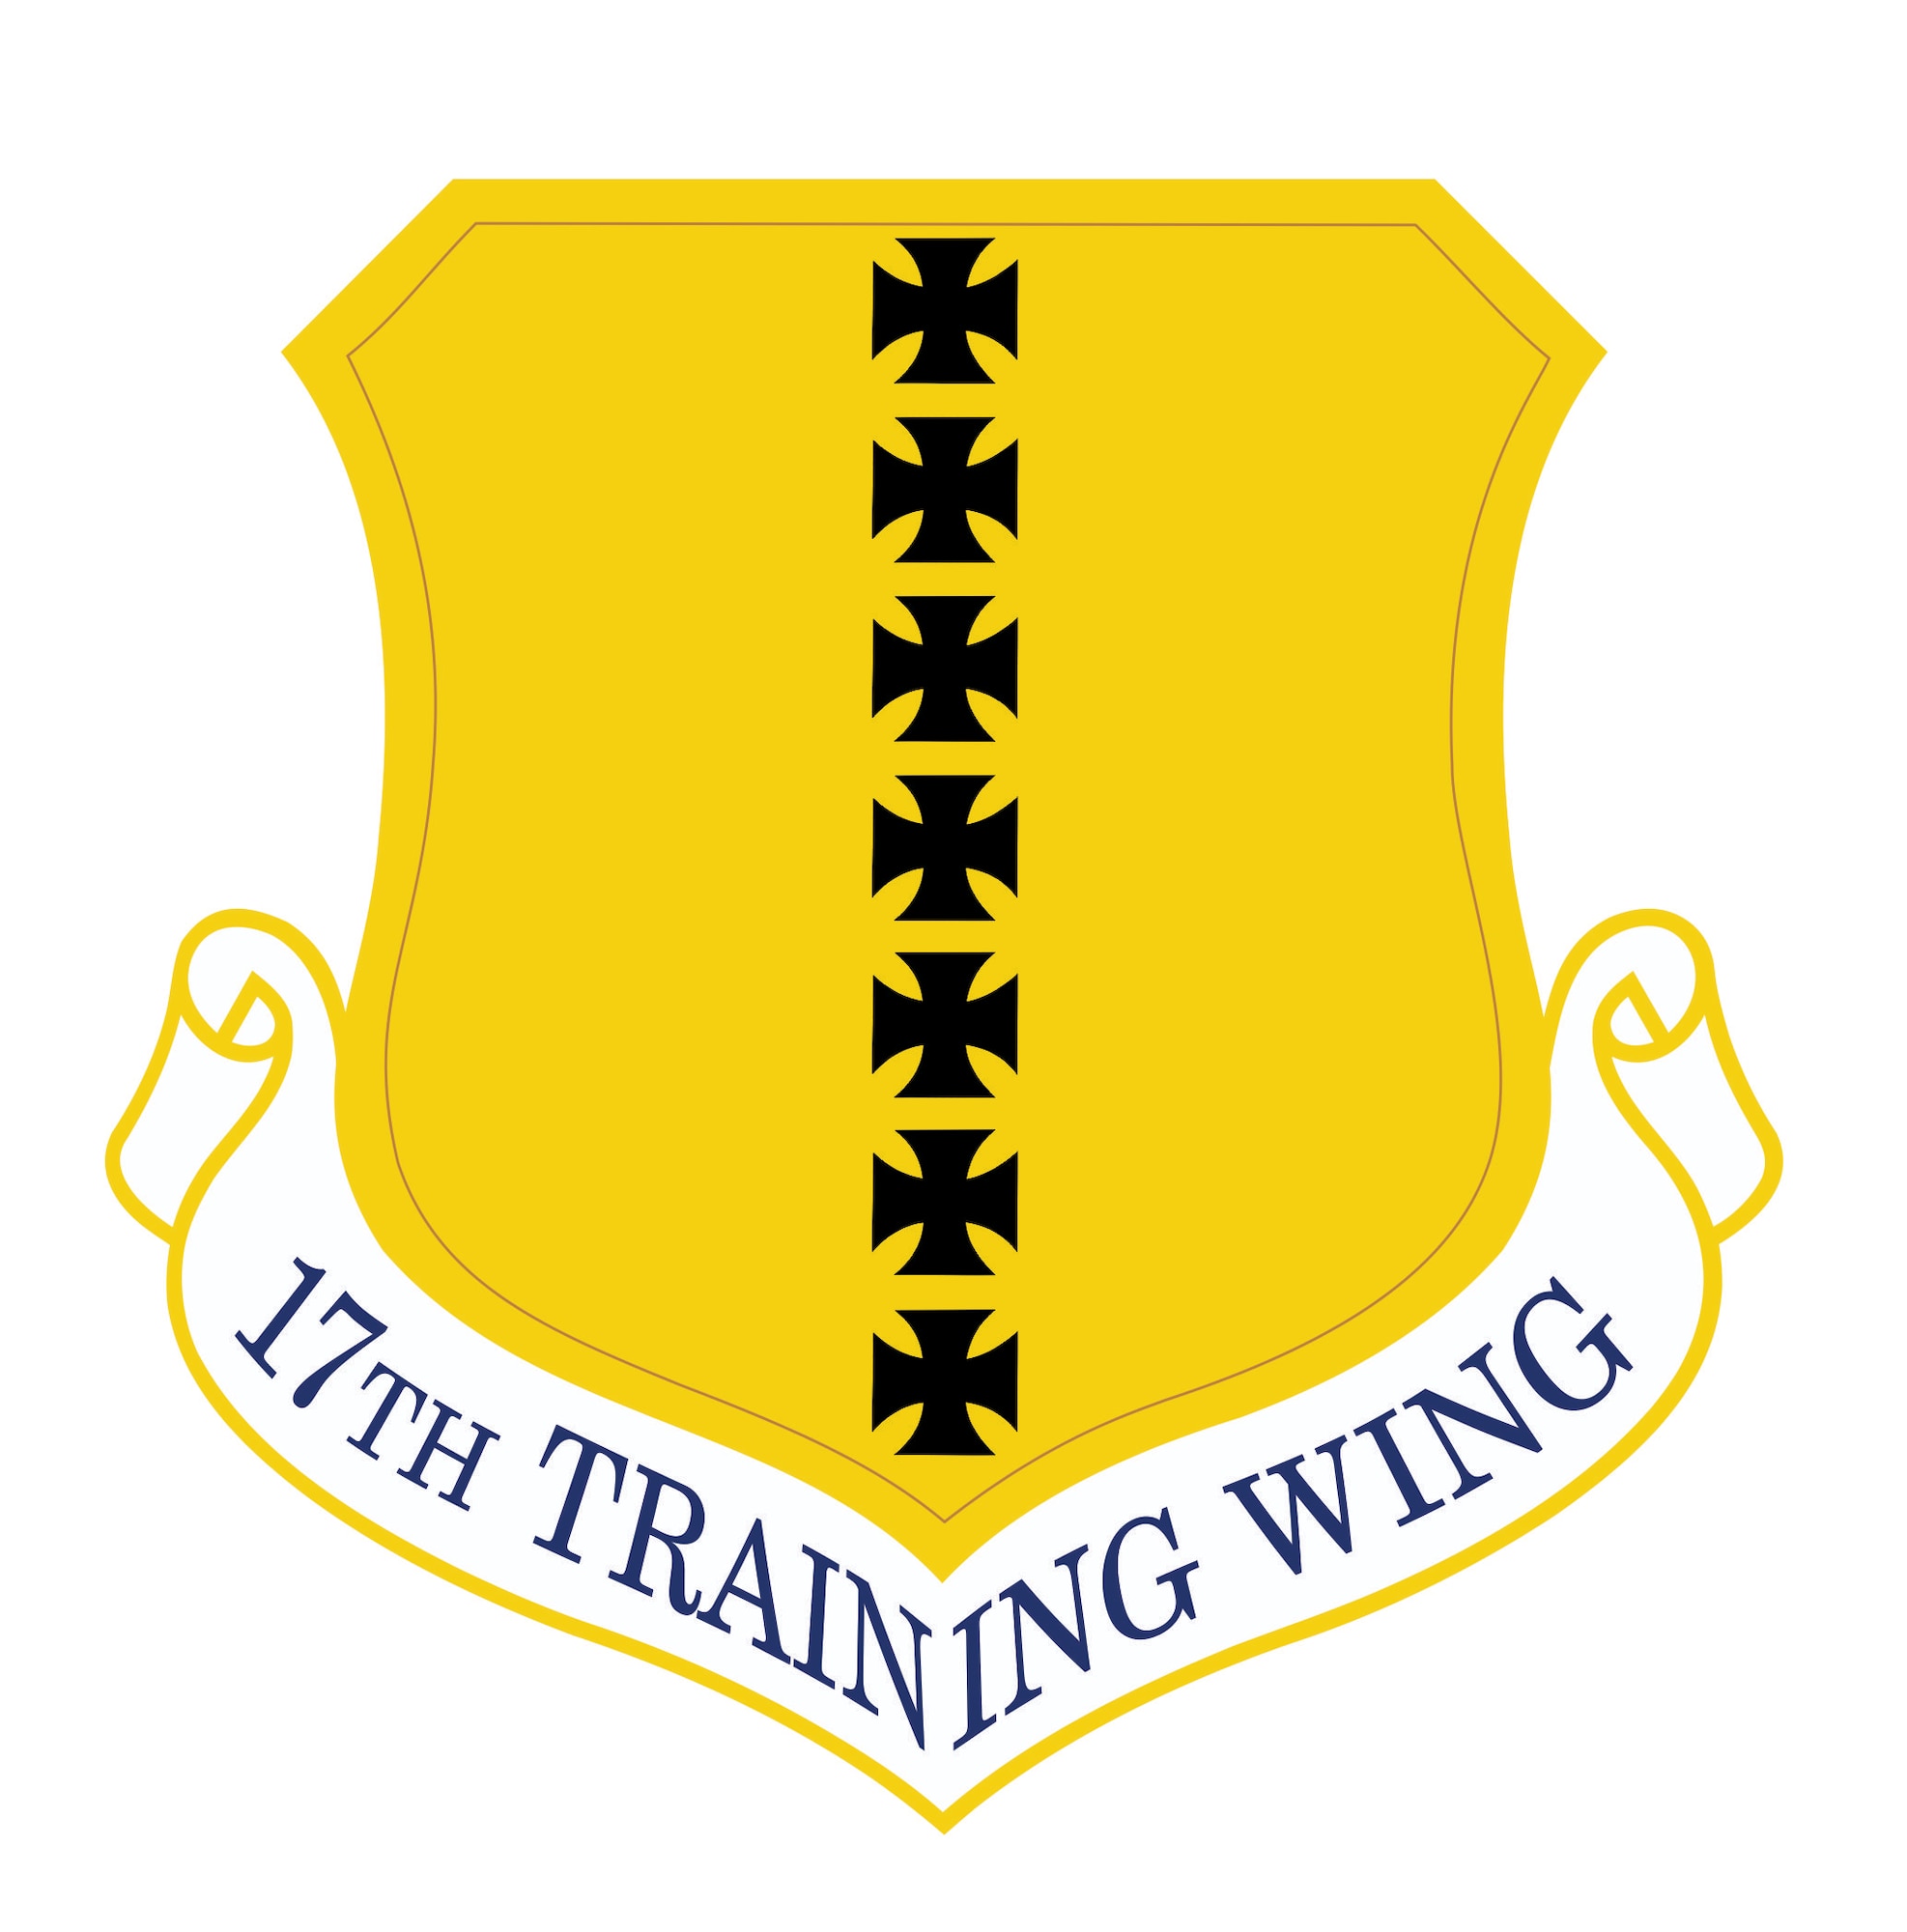 17th Training Wing 